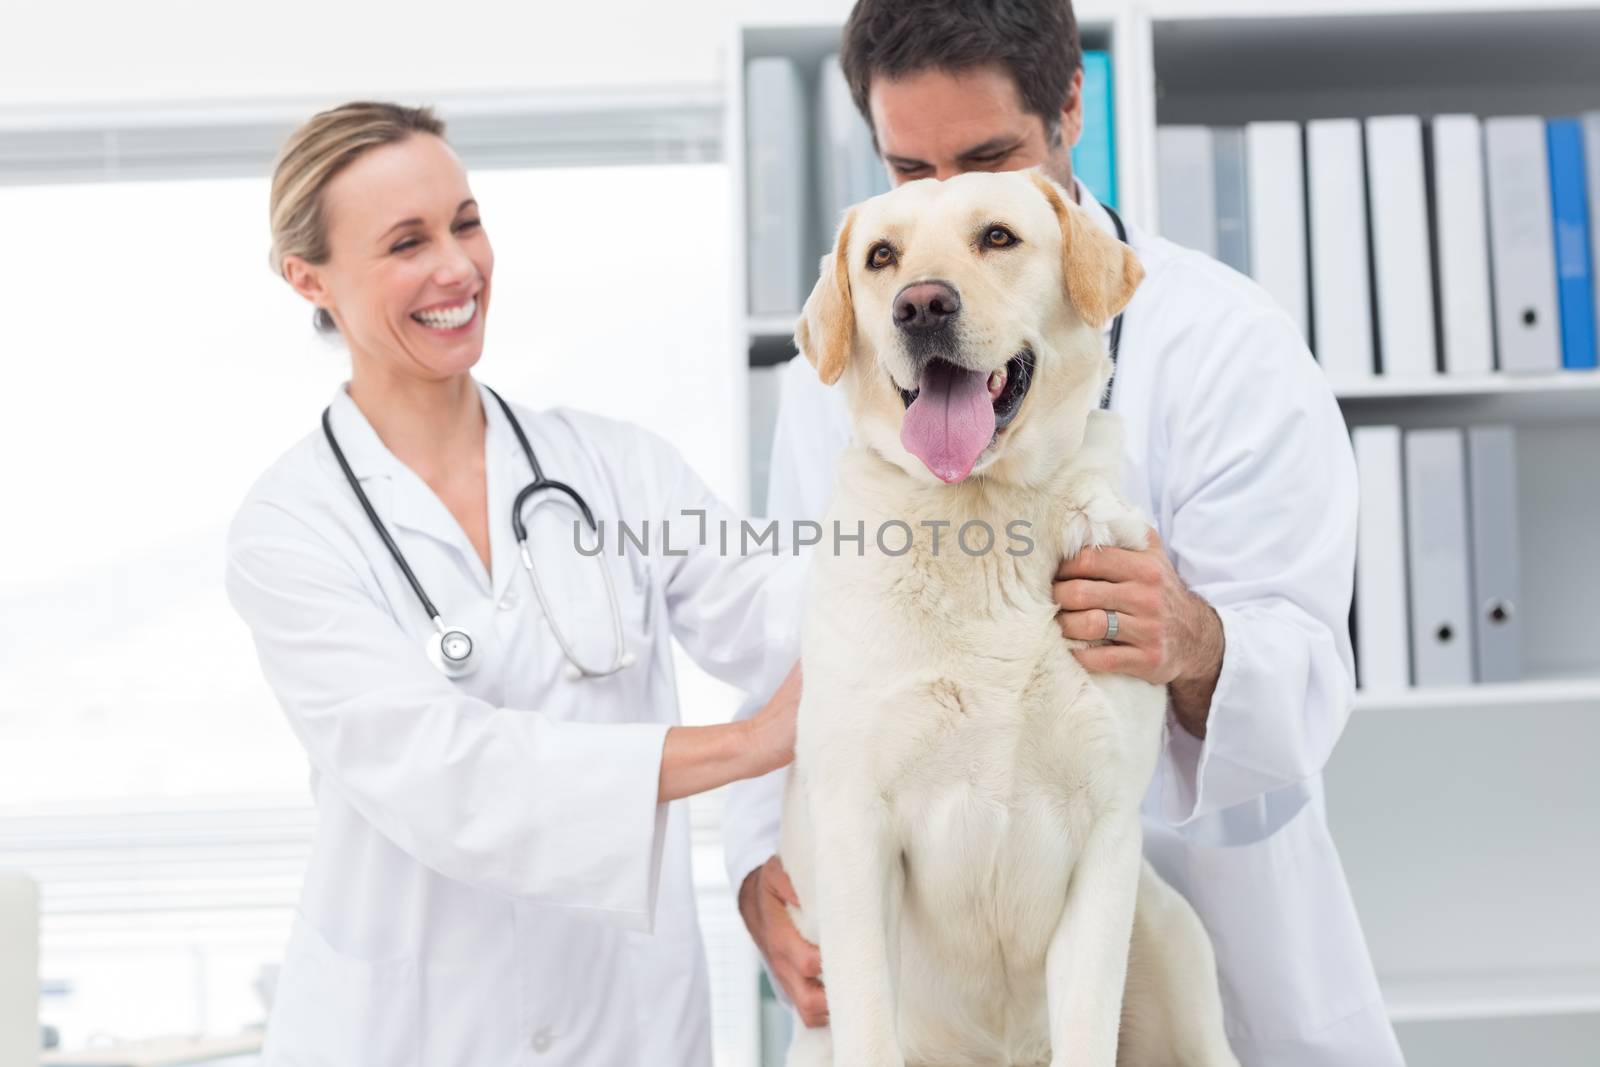 Happy veterinarians examining dog in clinic